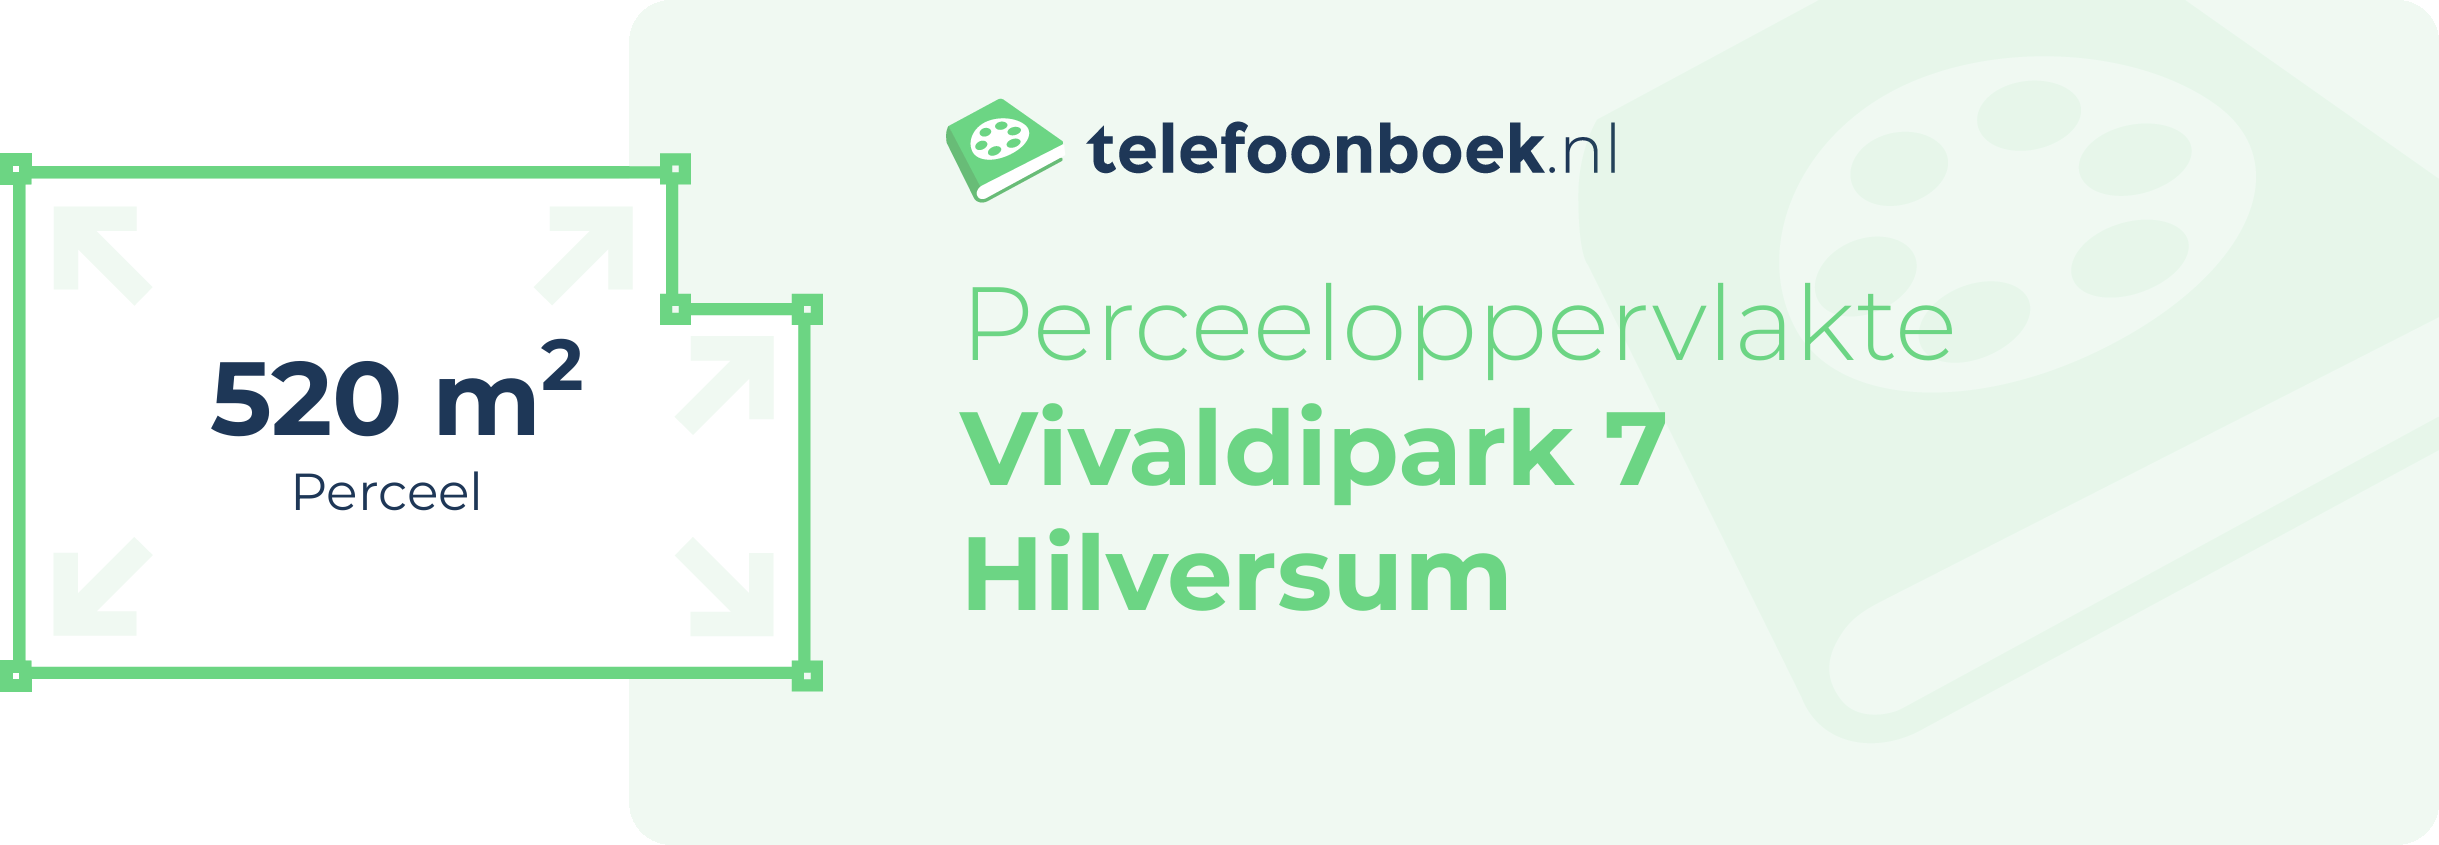 Perceeloppervlakte Vivaldipark 7 Hilversum